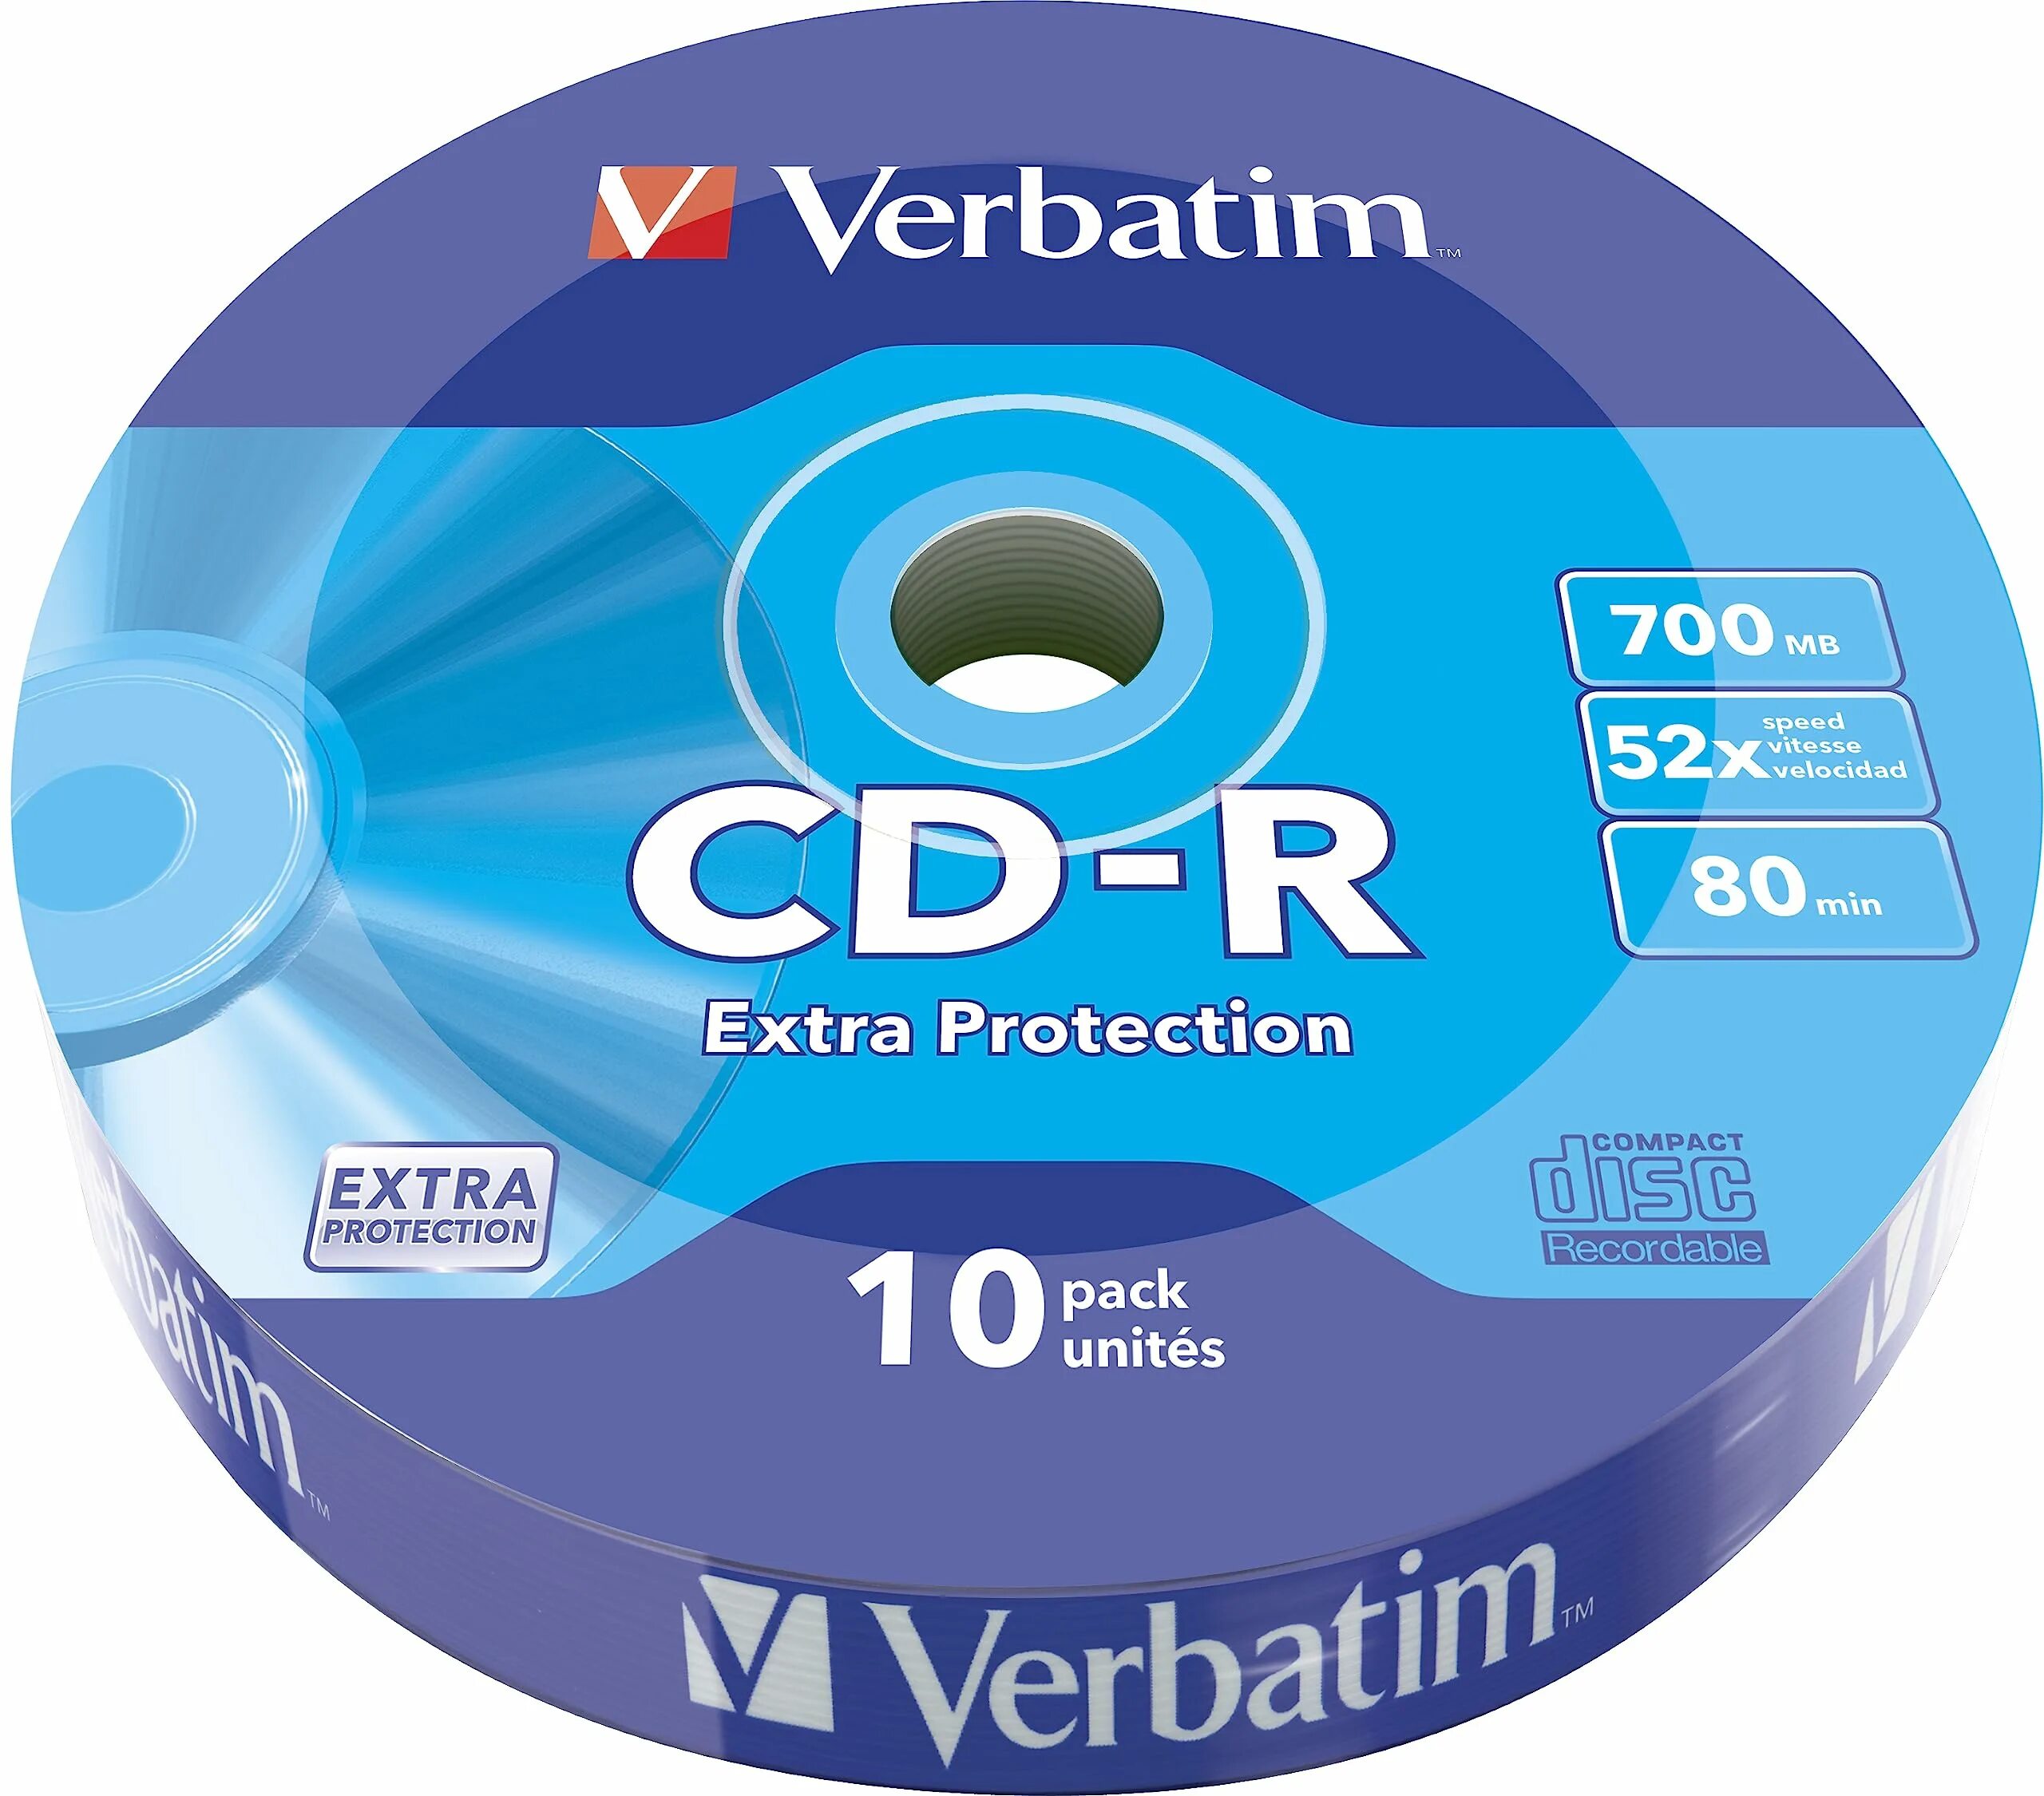 Диск CD-R 700 MB 52x. Verbatim CD-R Extra Protection 700mb. Verbatim CD-R 700mb 52x. Диск CD-R Verbatim 700 MB, 52x, Extra Protection 10шт Slim Case.